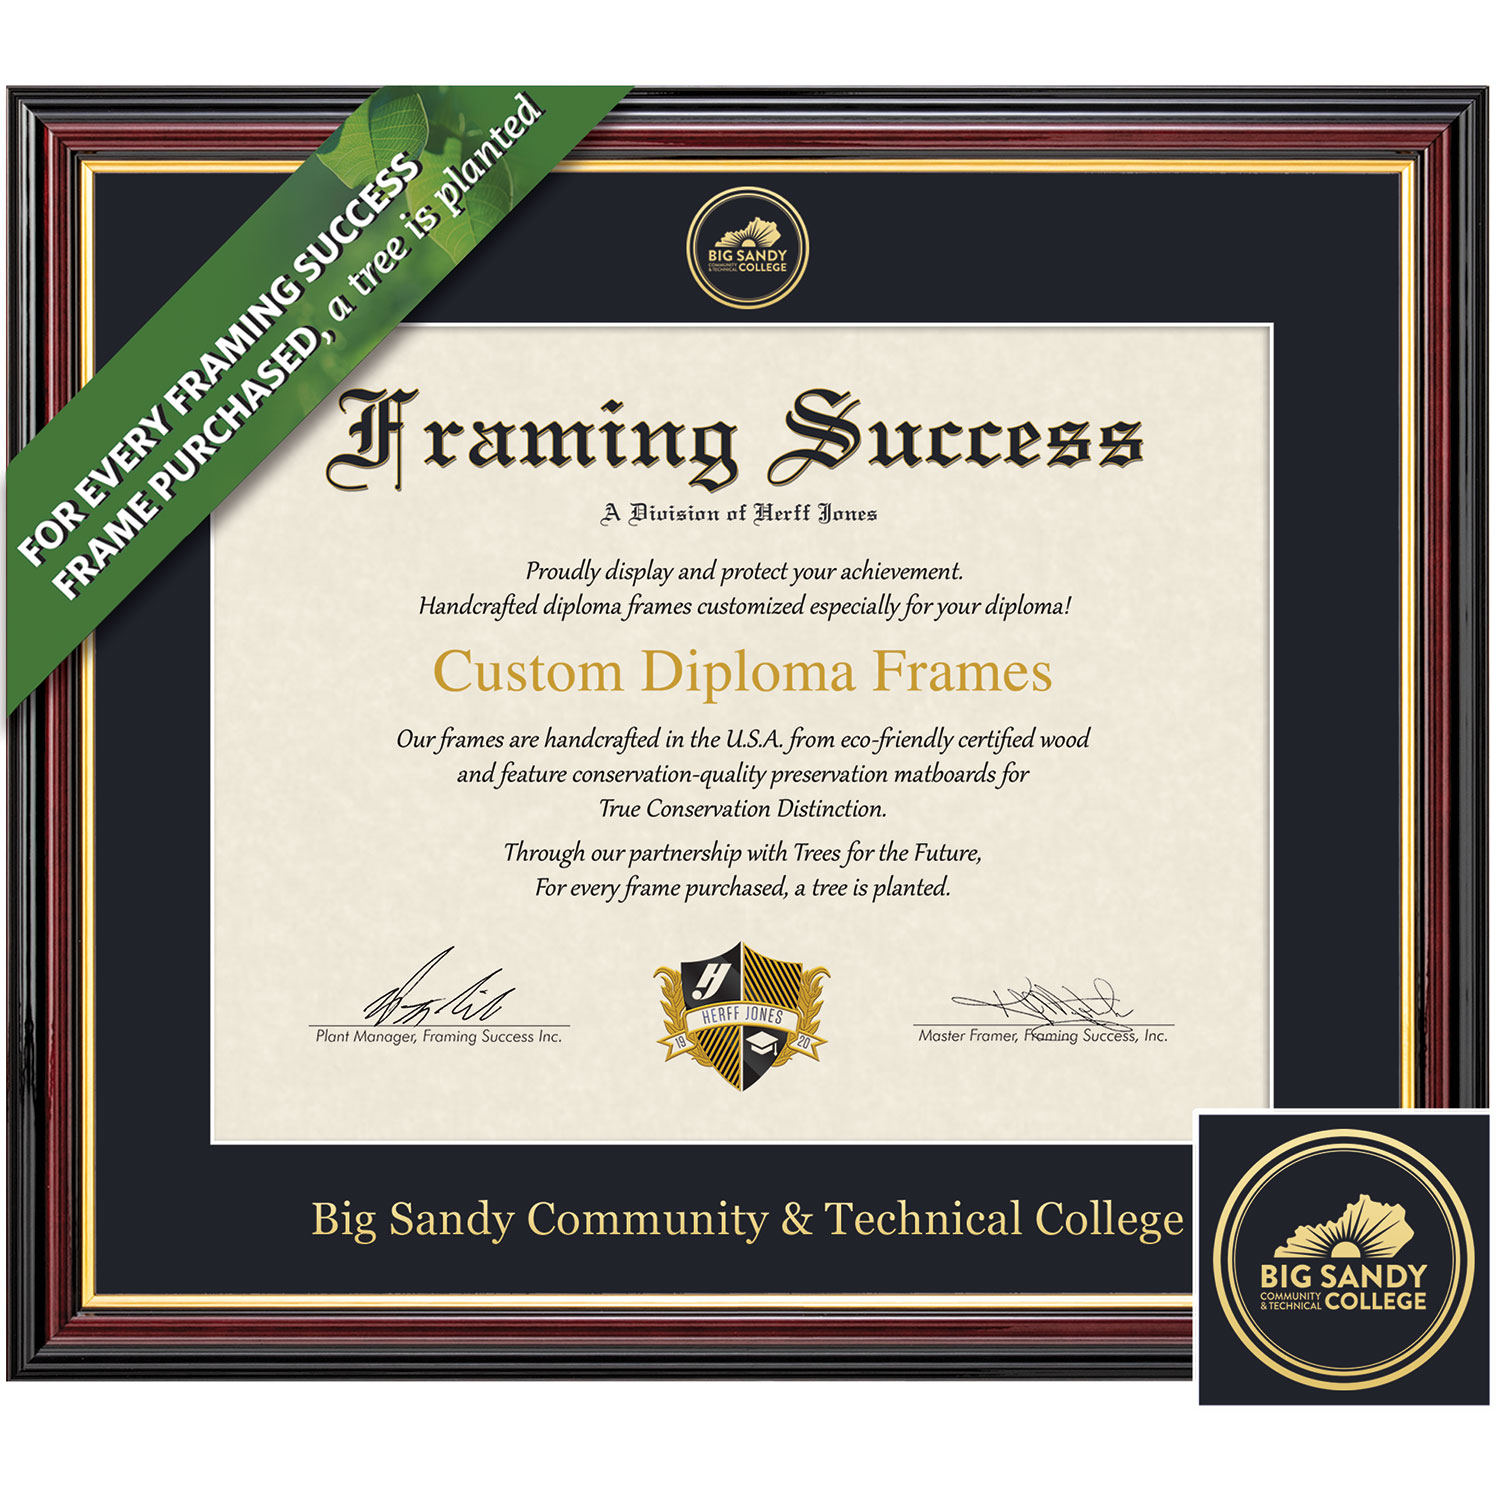 Framing Success 8.5 x 11 Academic Gold Emb School Seal Associates Diploma Frame